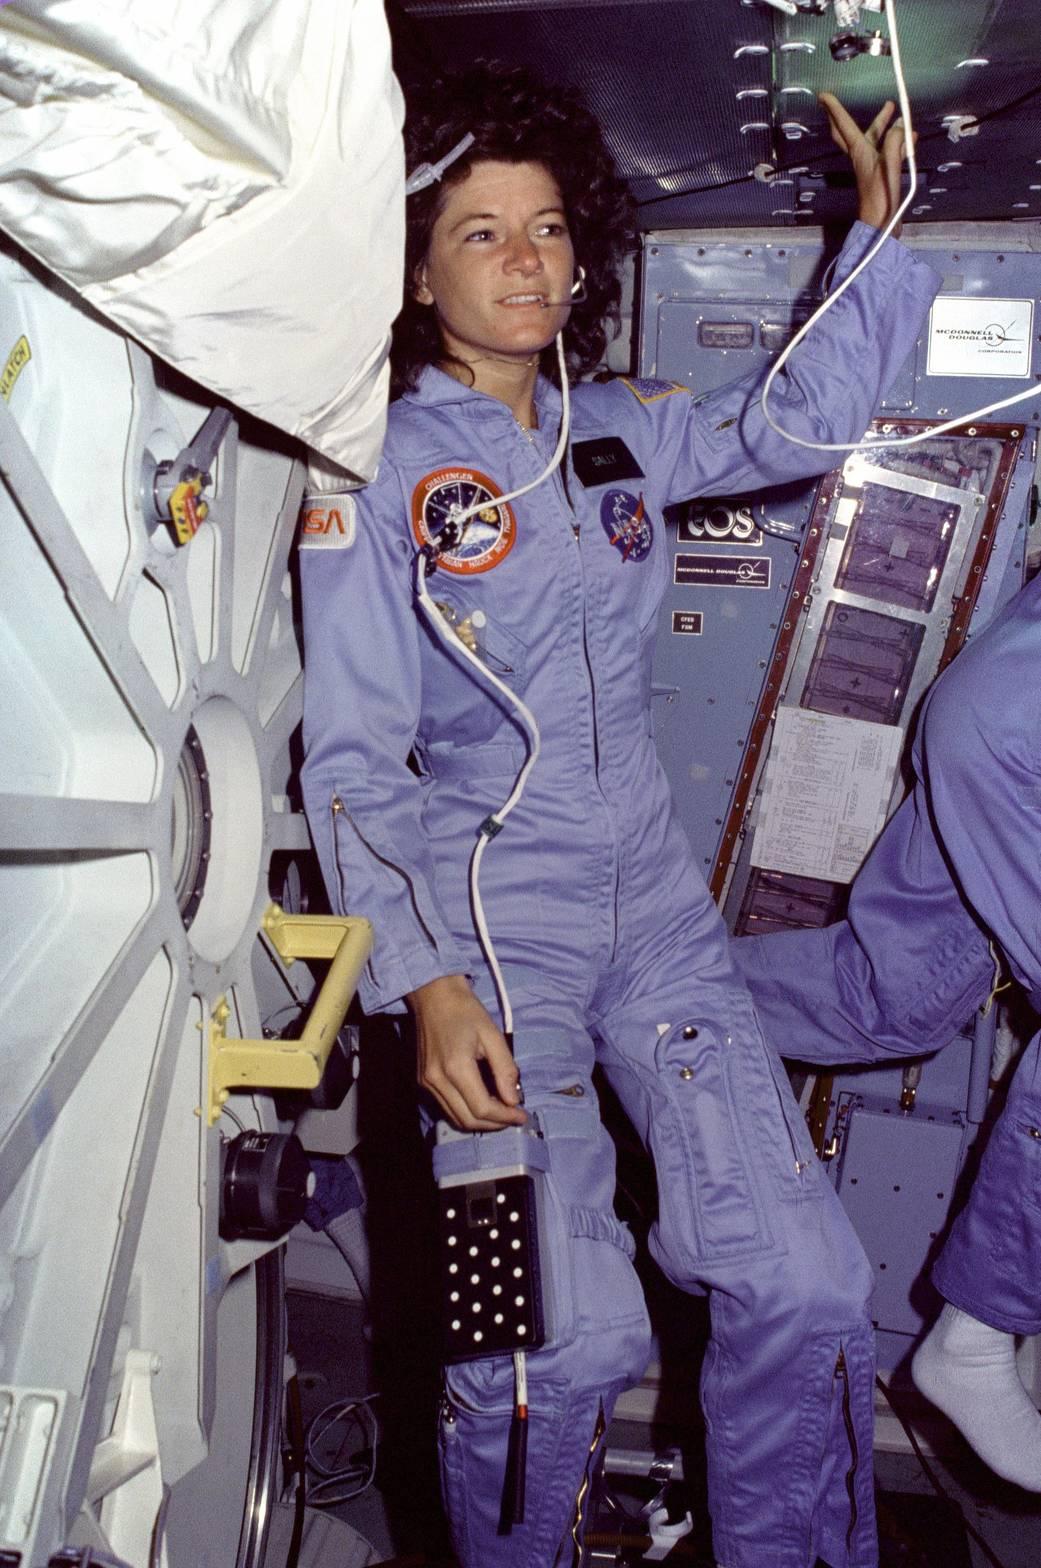 Valentina Tereshkova: First woman in space